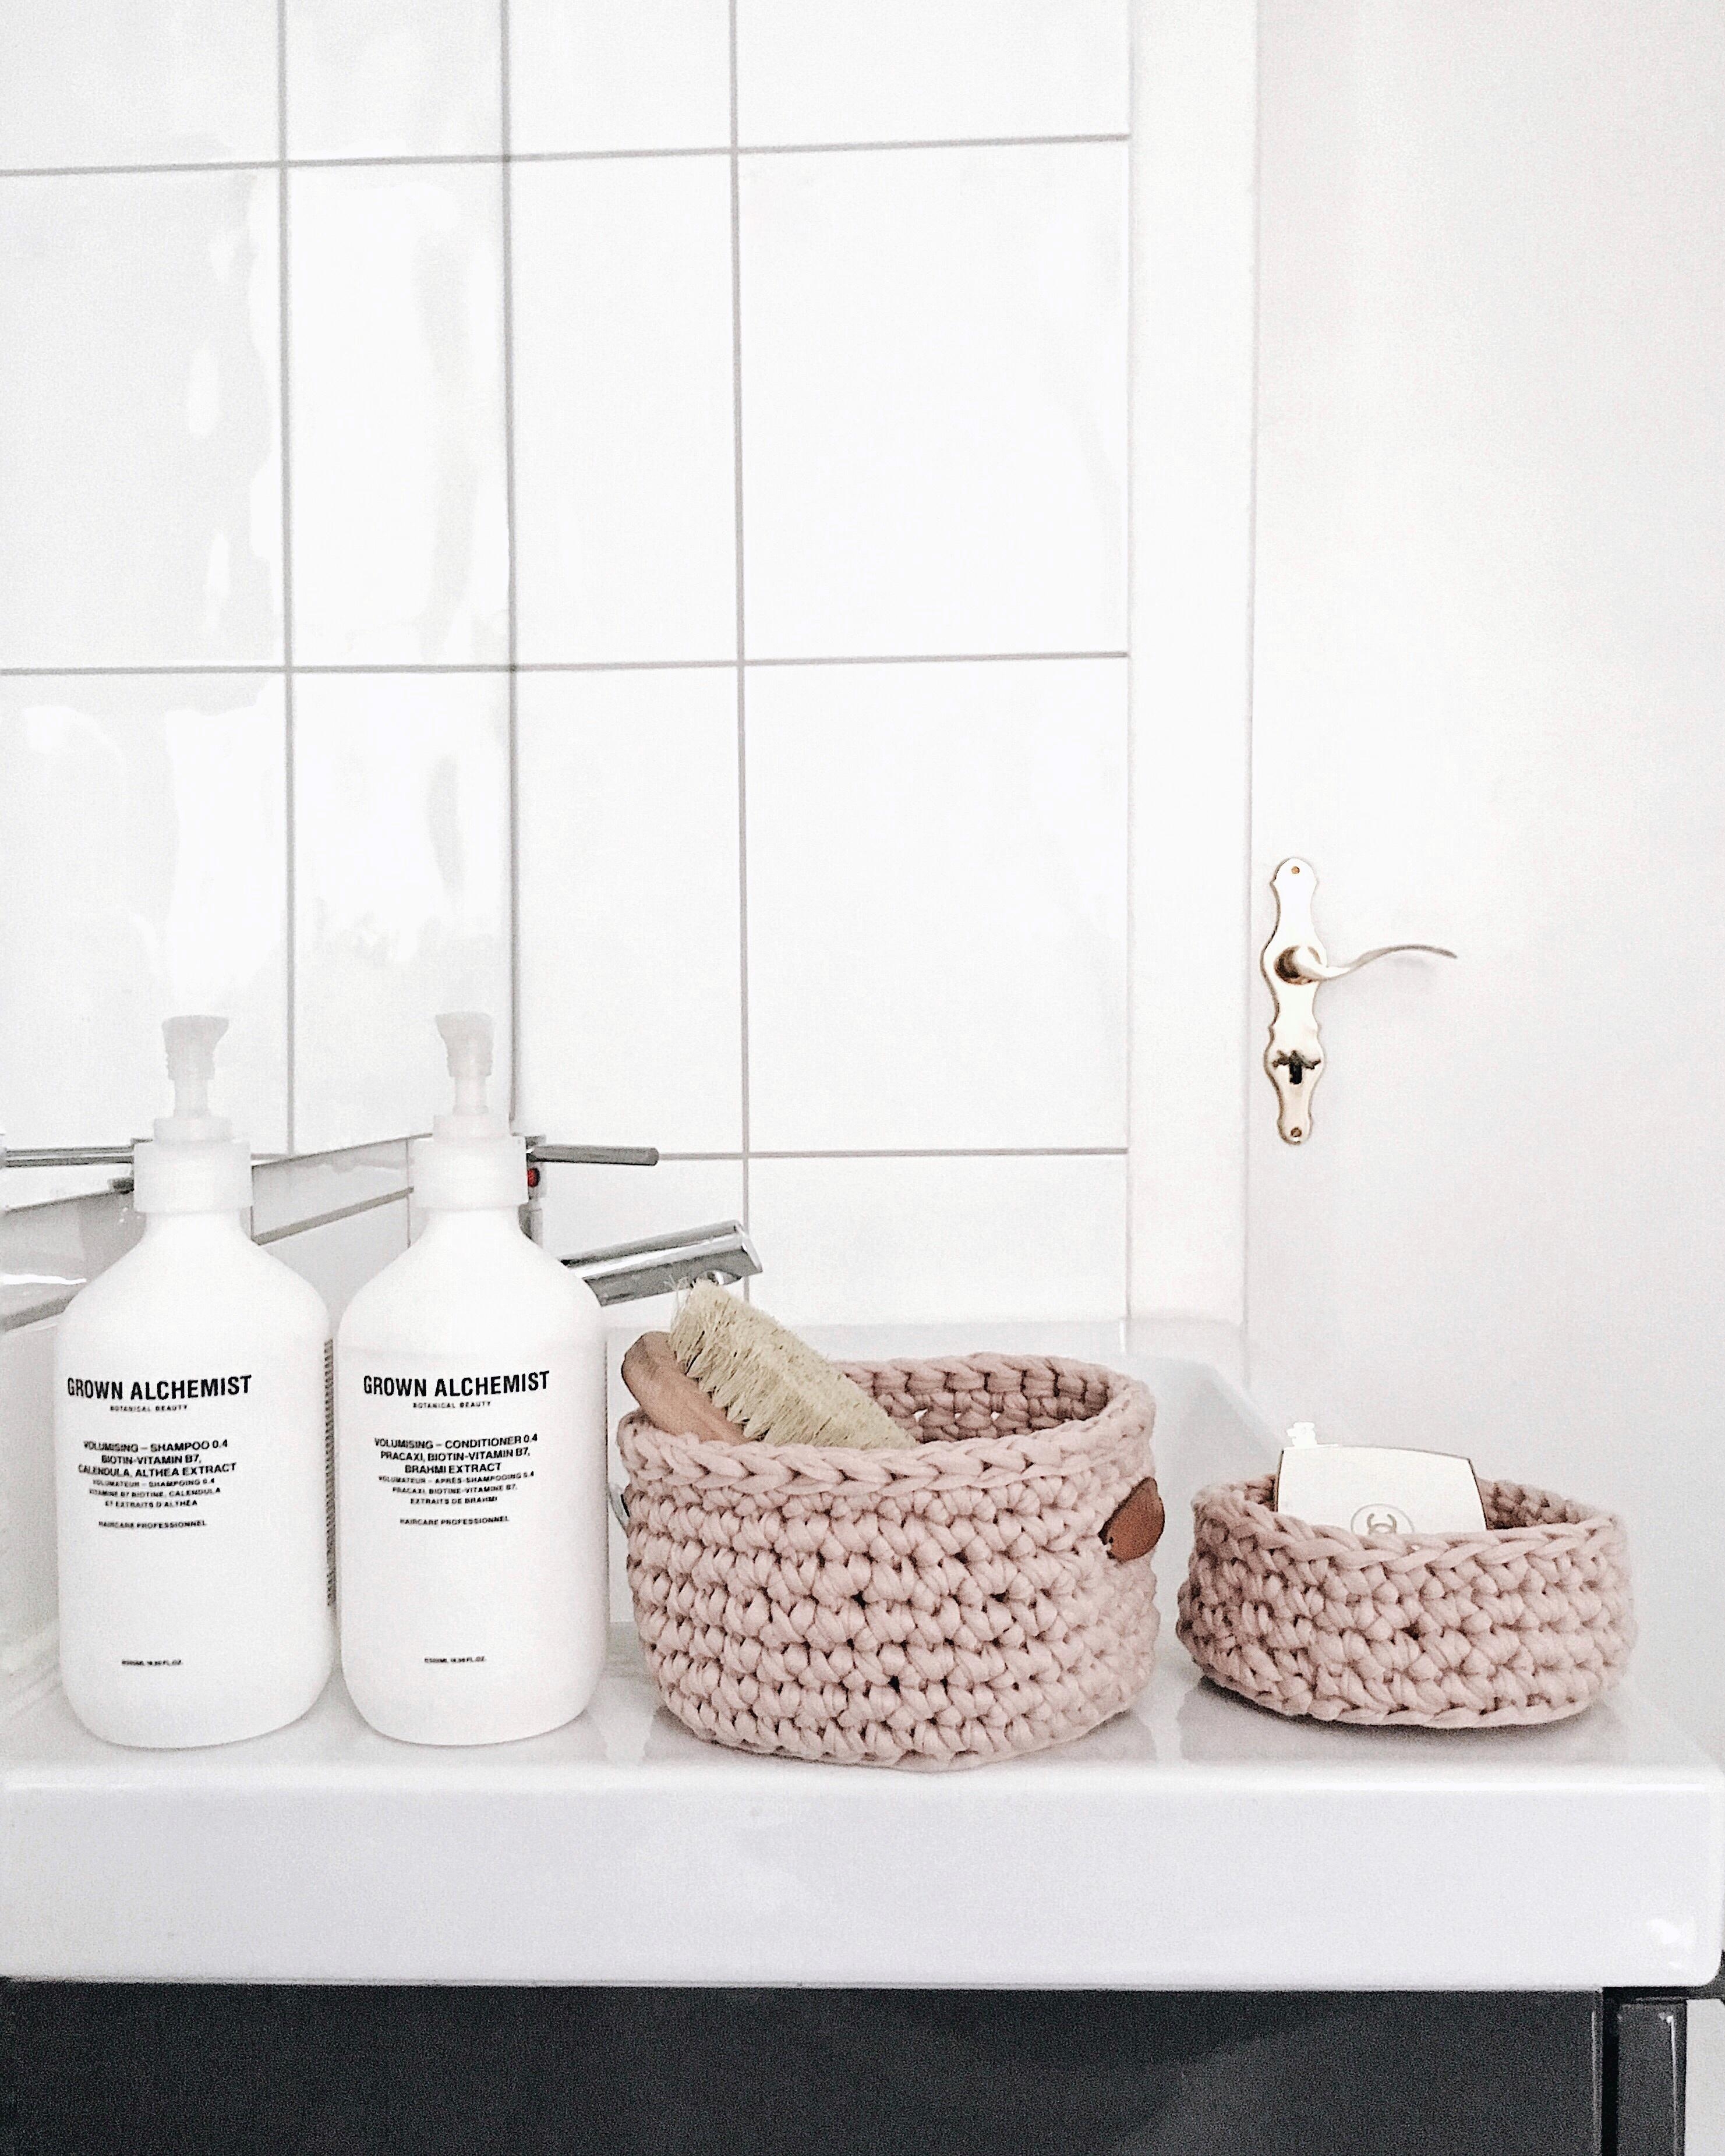 Keep it simple.
#minimalismo #design #home #styleinspiration #bathroom #organic #cosmeticsaddict #style #badezimmerdeko